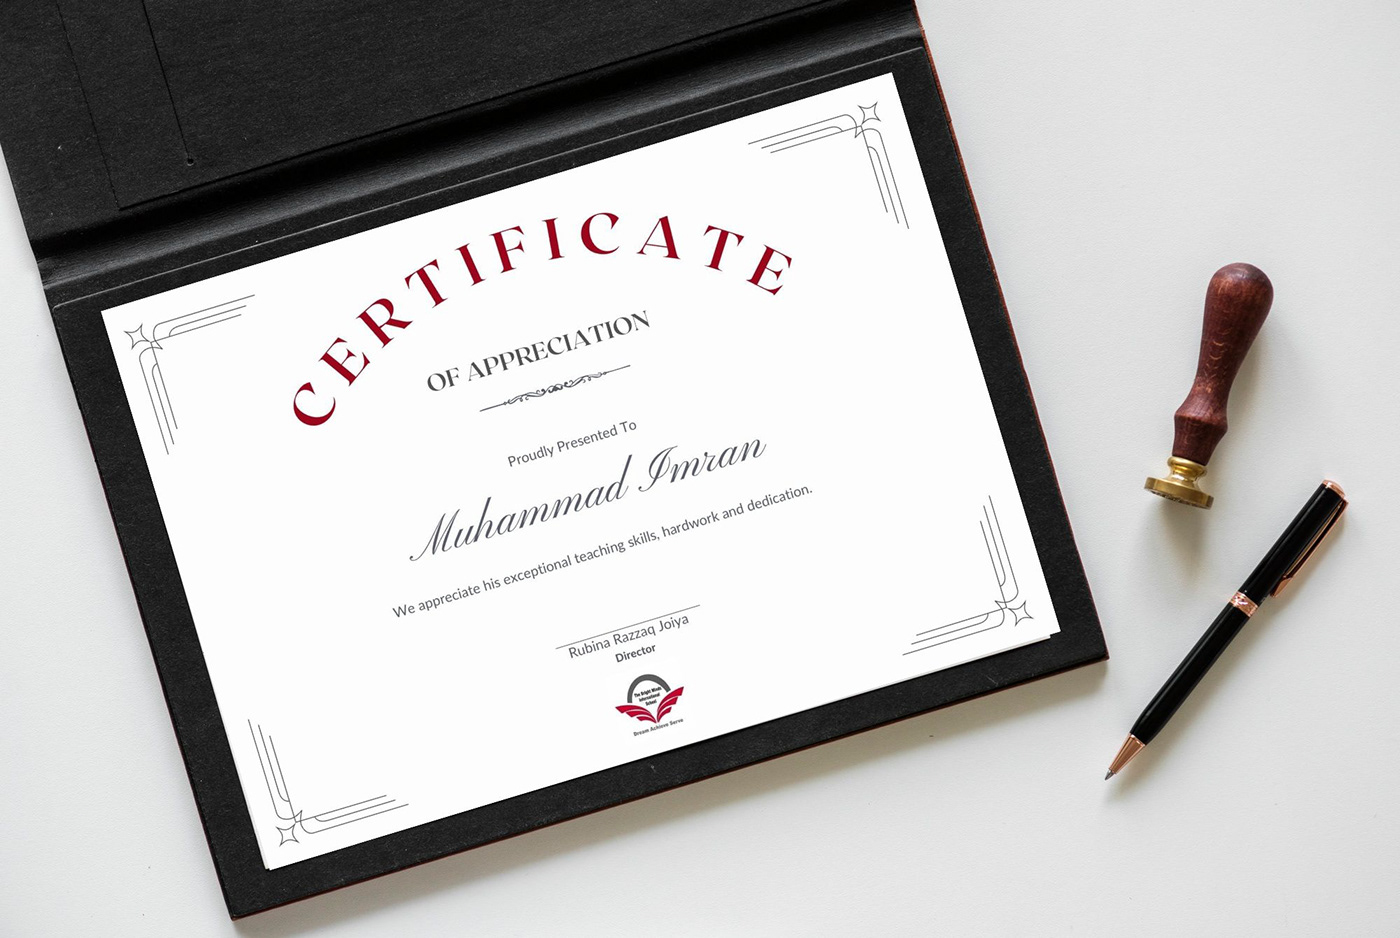 design certificate design Certificates award achievement Acknowledgement Appreciation certificate template teaching graphic design 